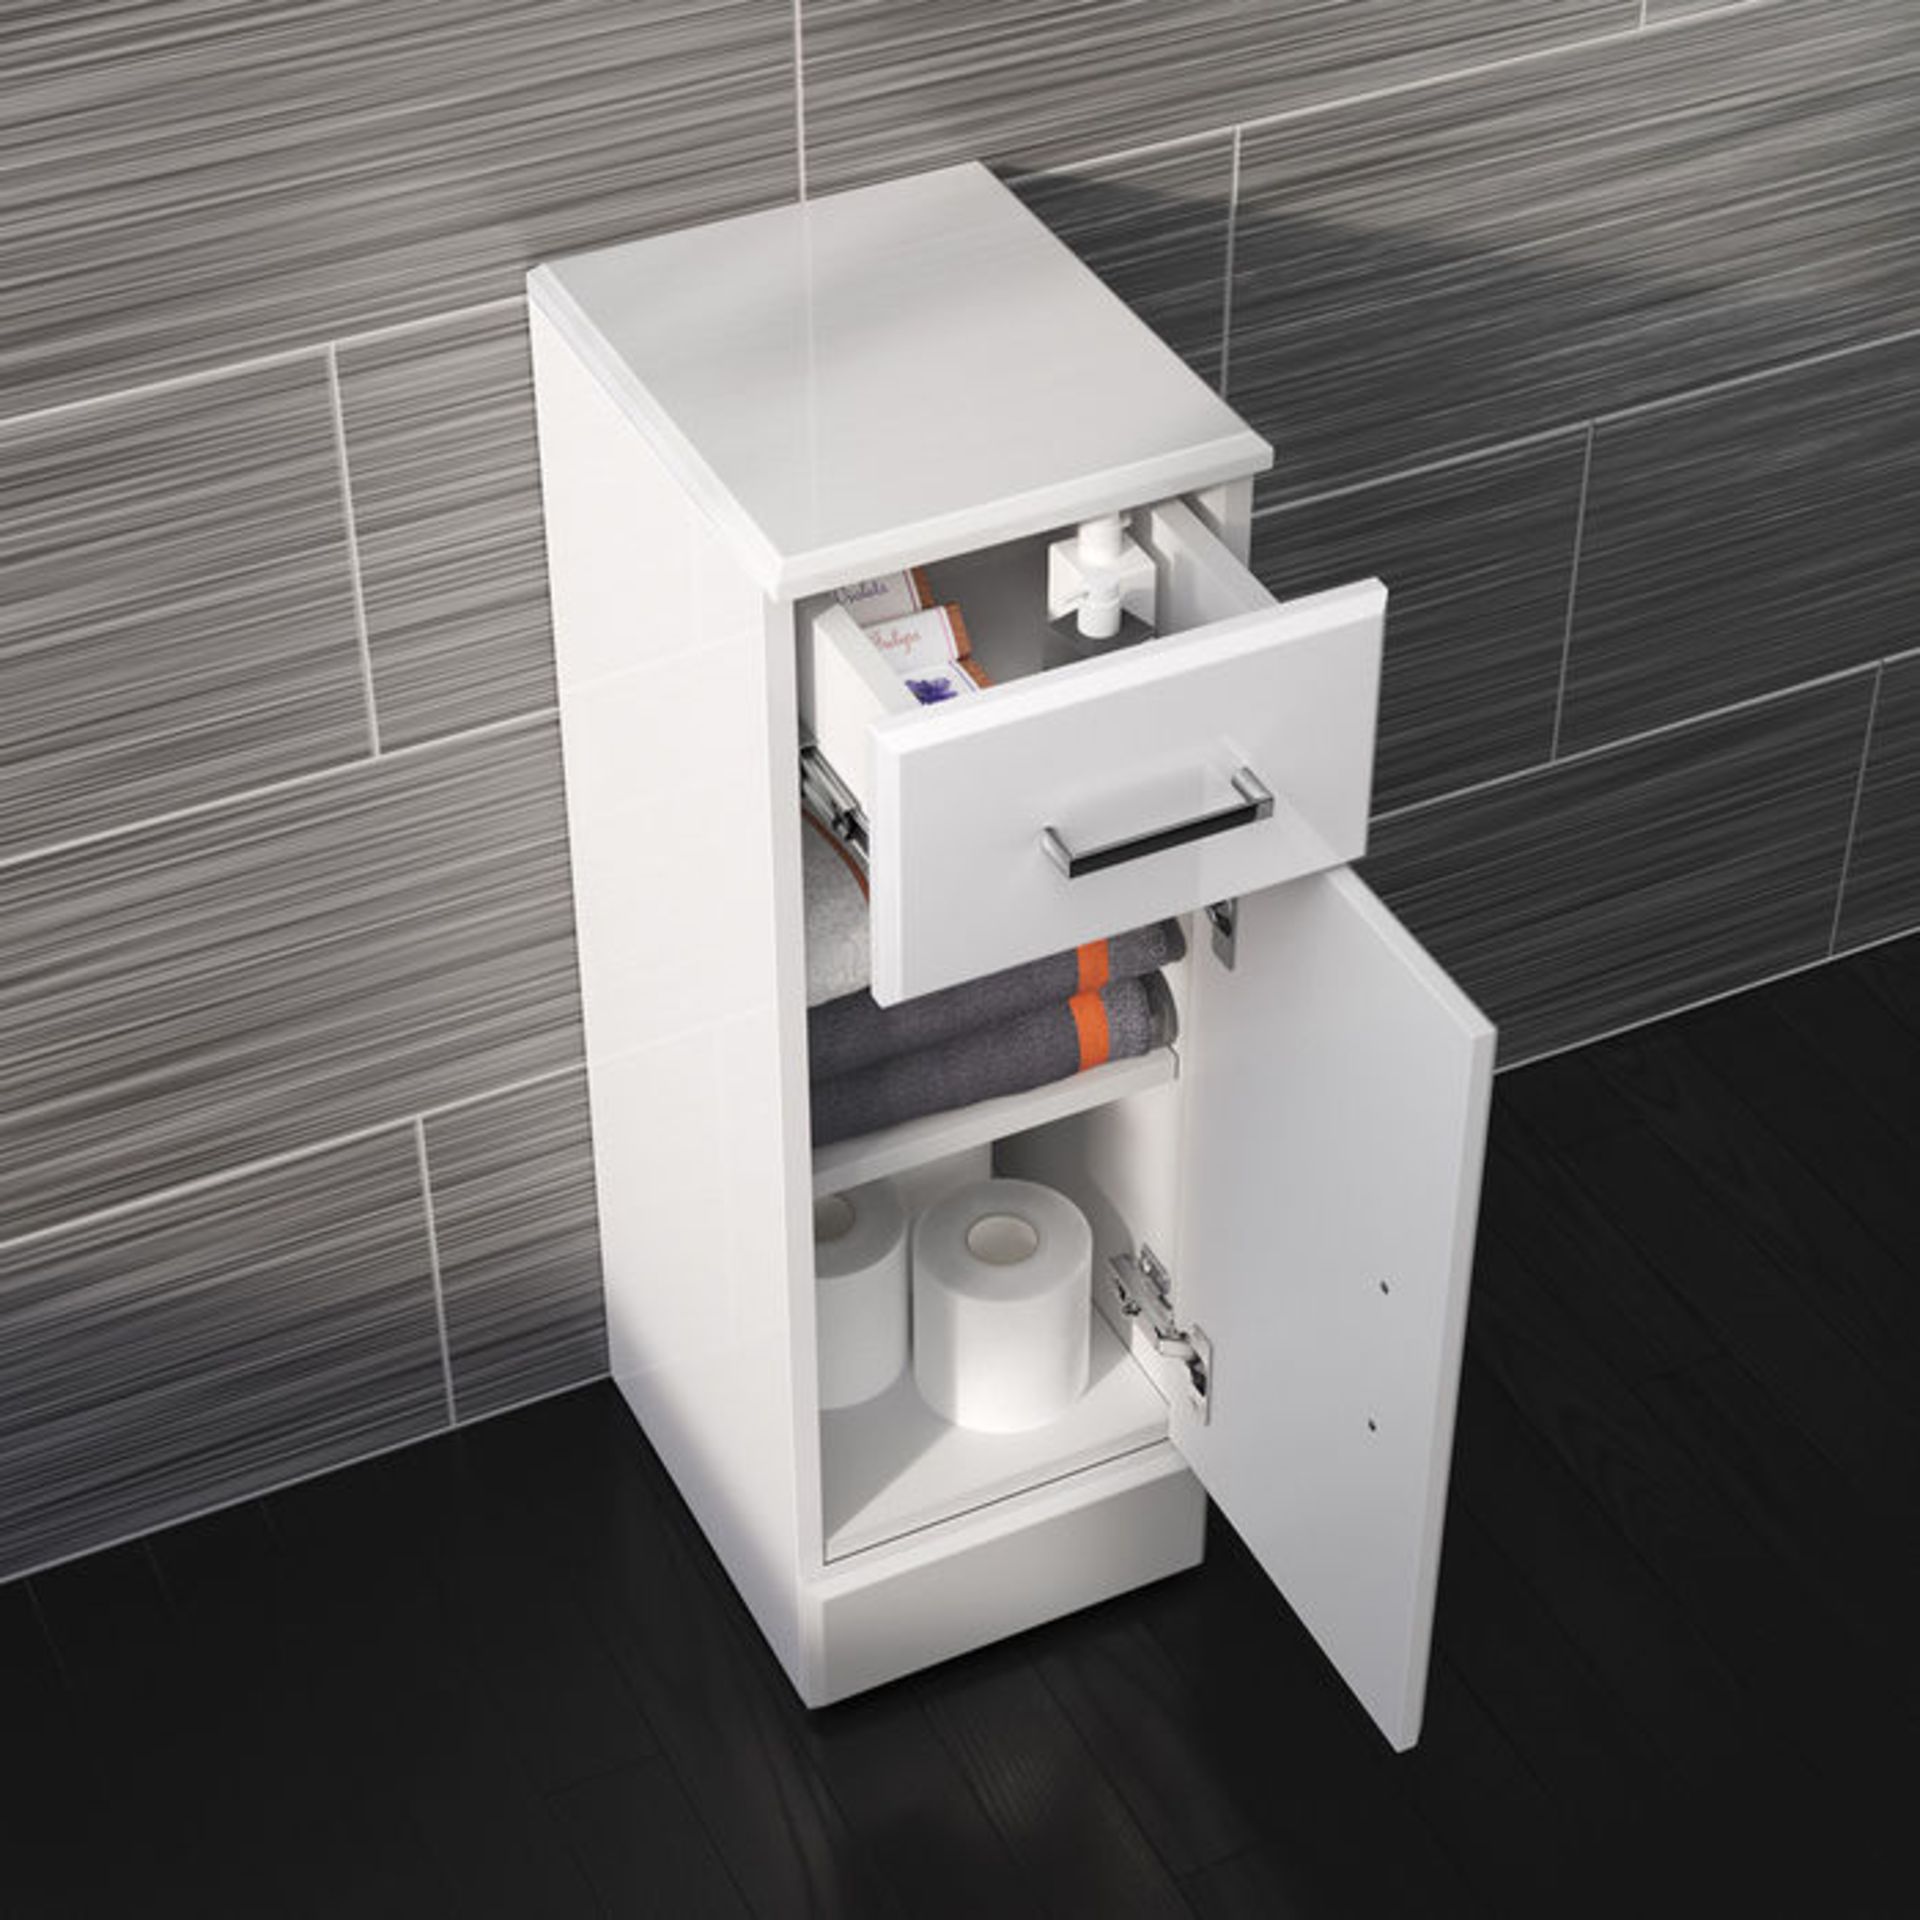 (Y194) 250x300mm Quartz Gloss White Small Side Cabinet Unit. RRP £143.99. Pristine gloss white - Image 2 of 6